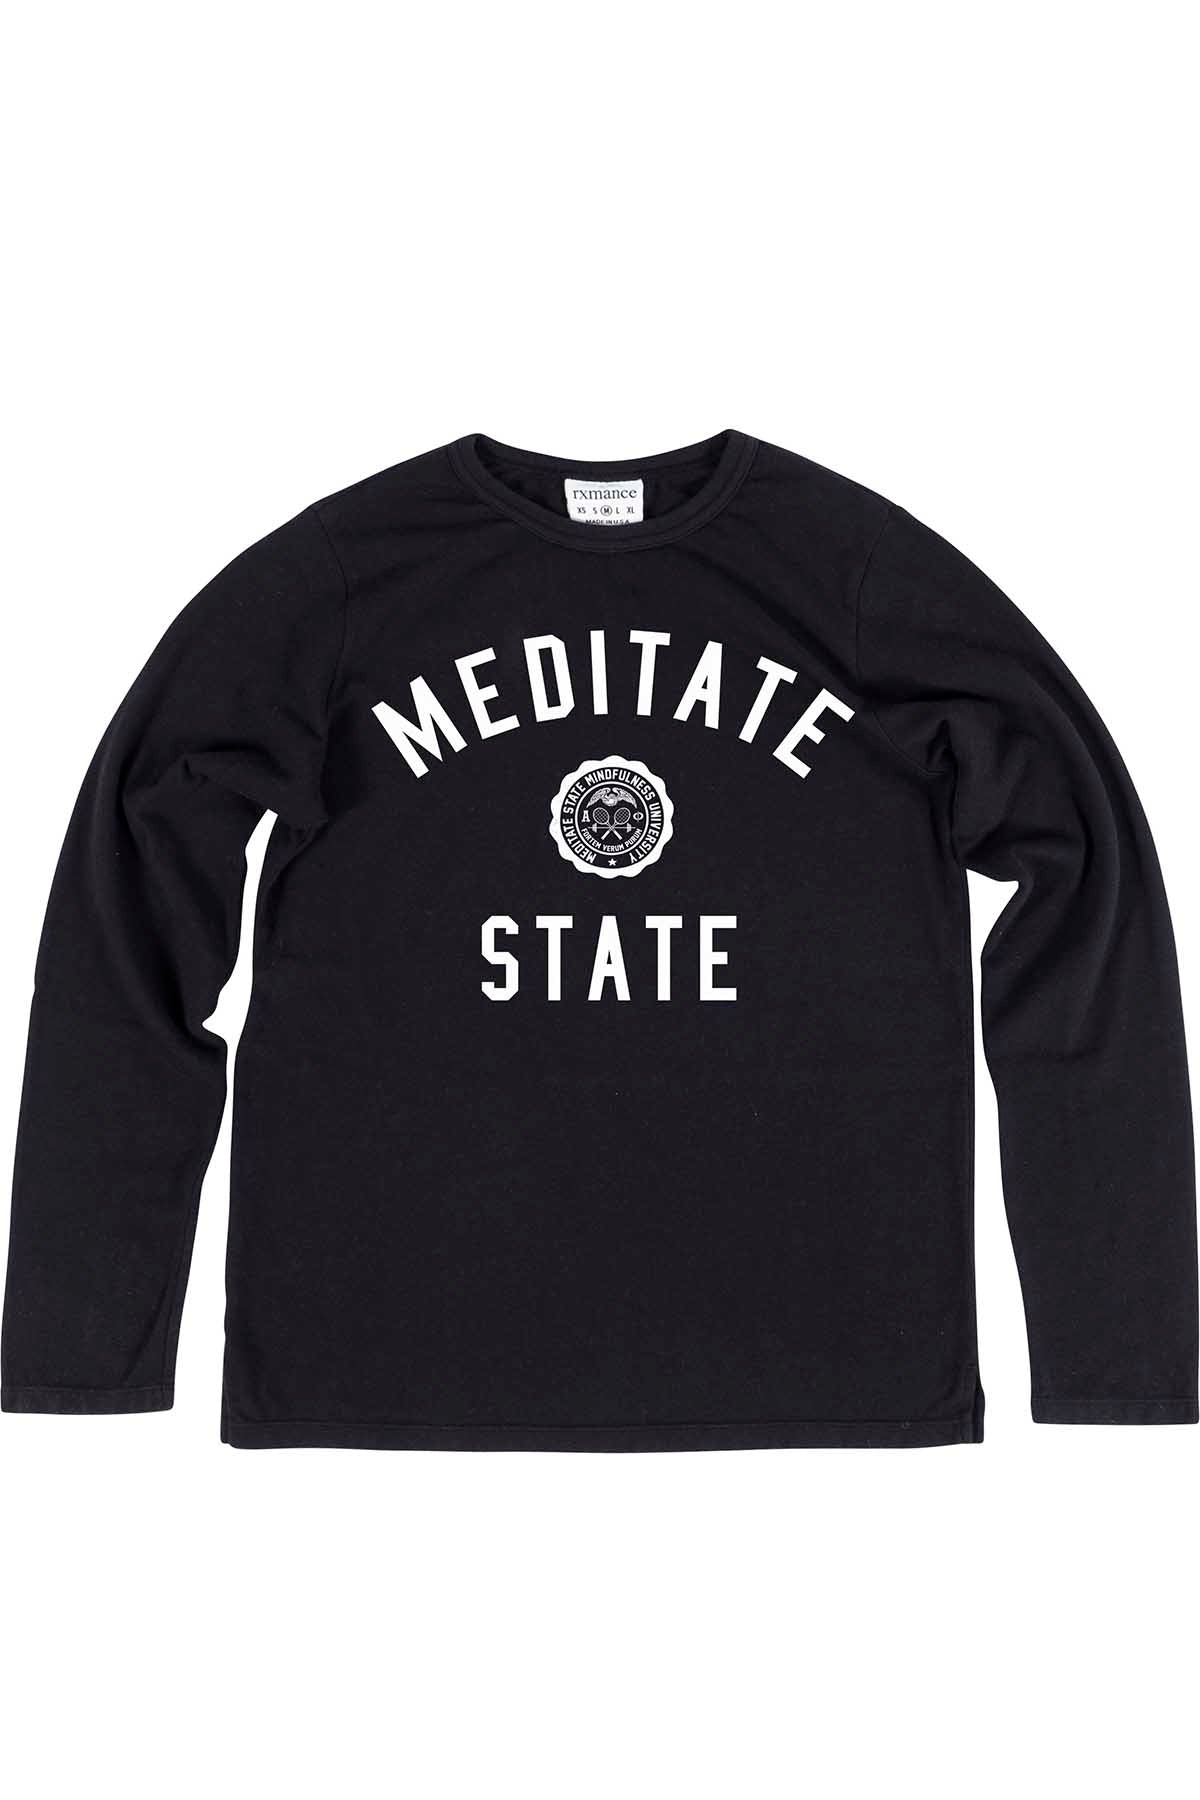 Rxmance Unisex Black Meditate State Loose Knit Long Sleeve Shirt